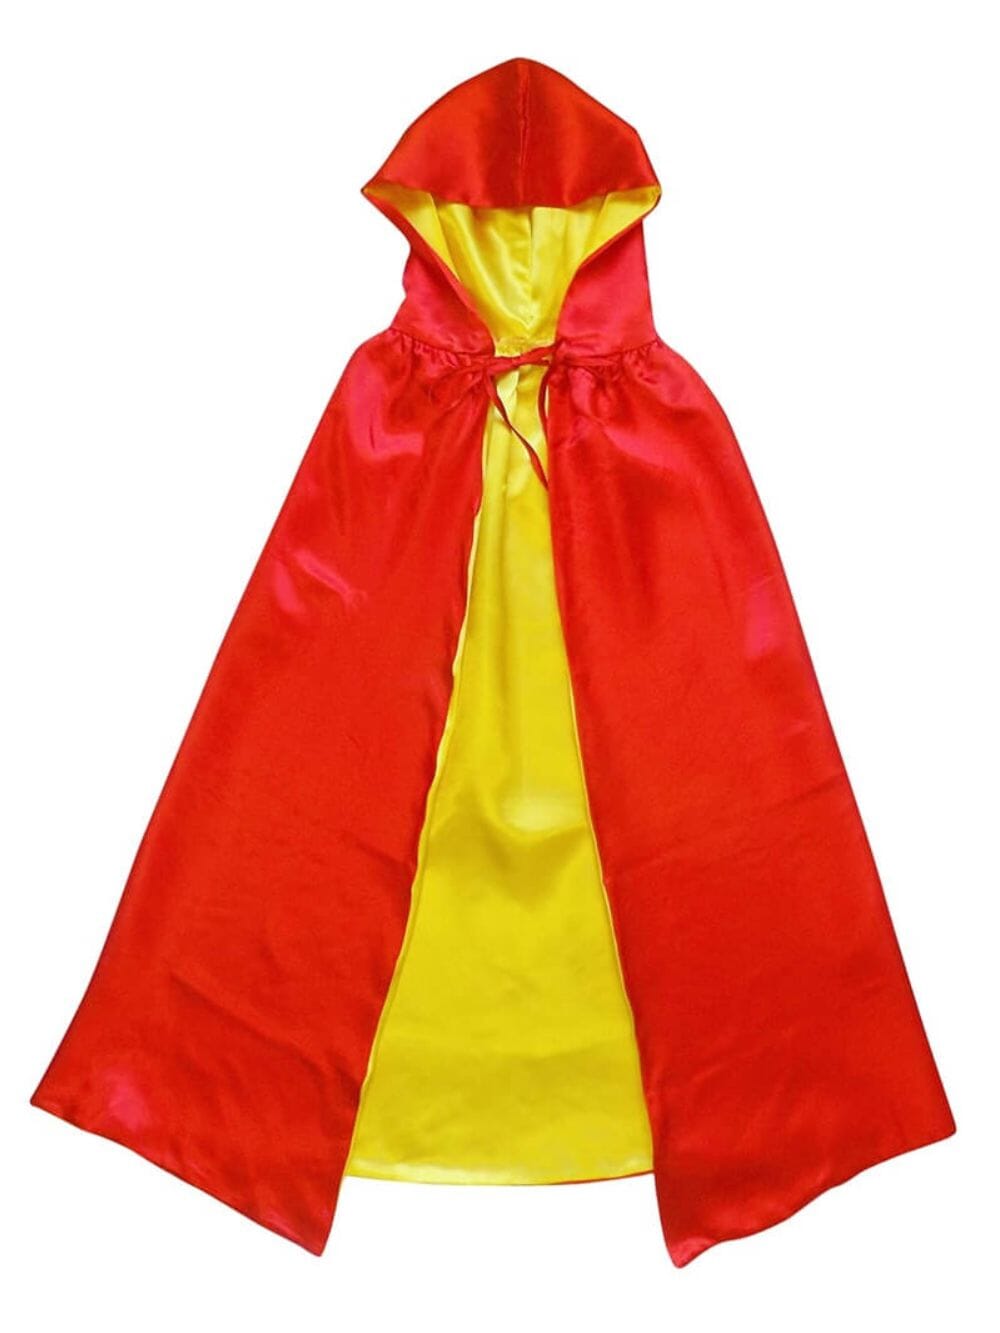 Red & Yellow Hooded Cape, Superhero or Princess Reversible Hooded Cloak - Sydney So Sweet